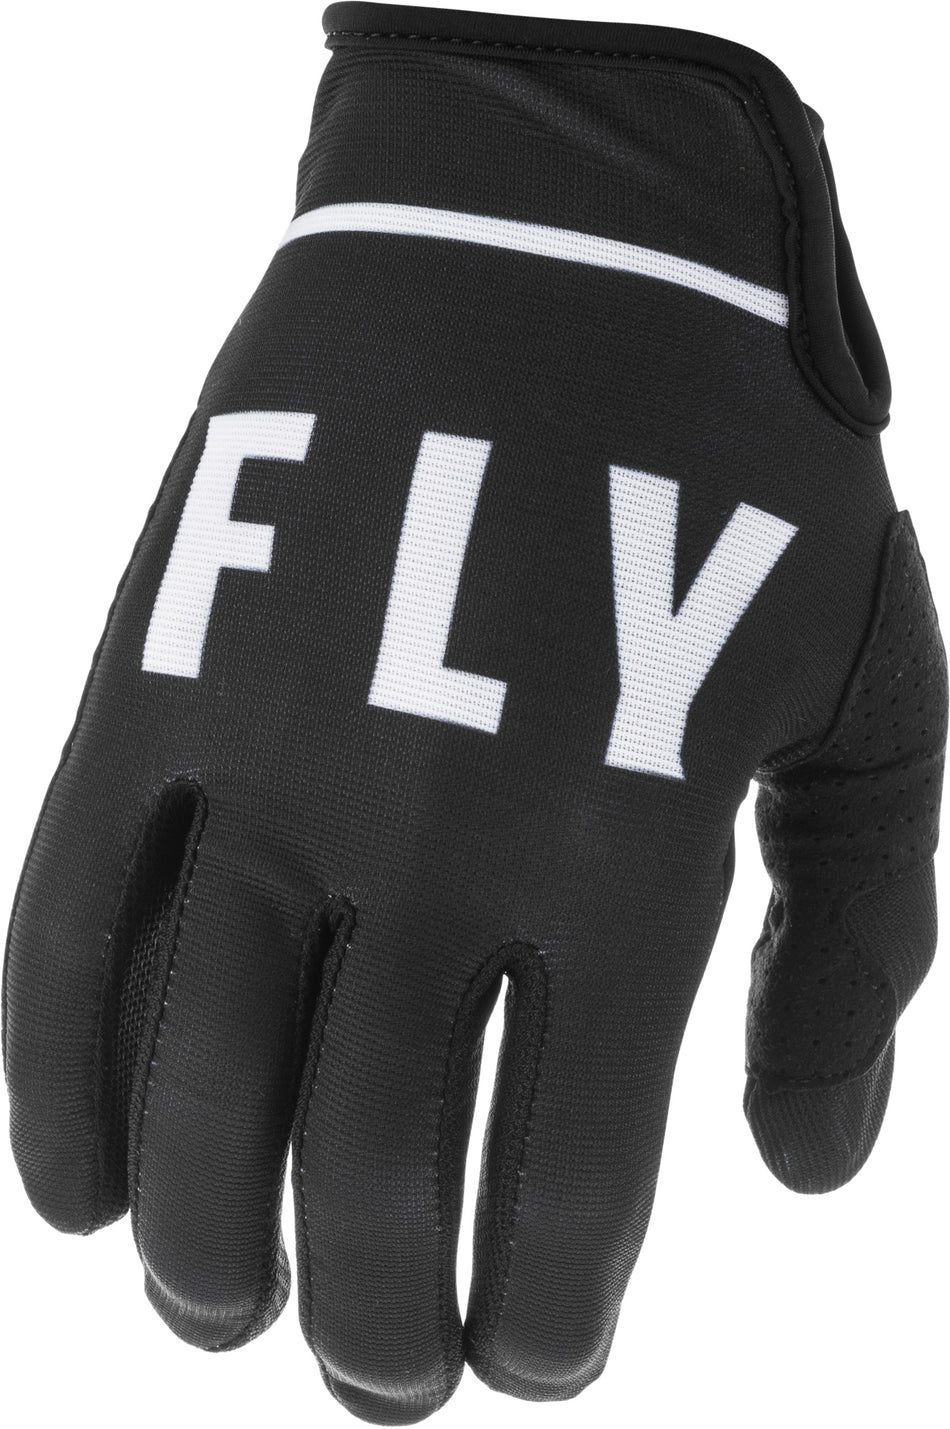 FLY RACING Lite Gloves Black/White Sz 11 373-71111